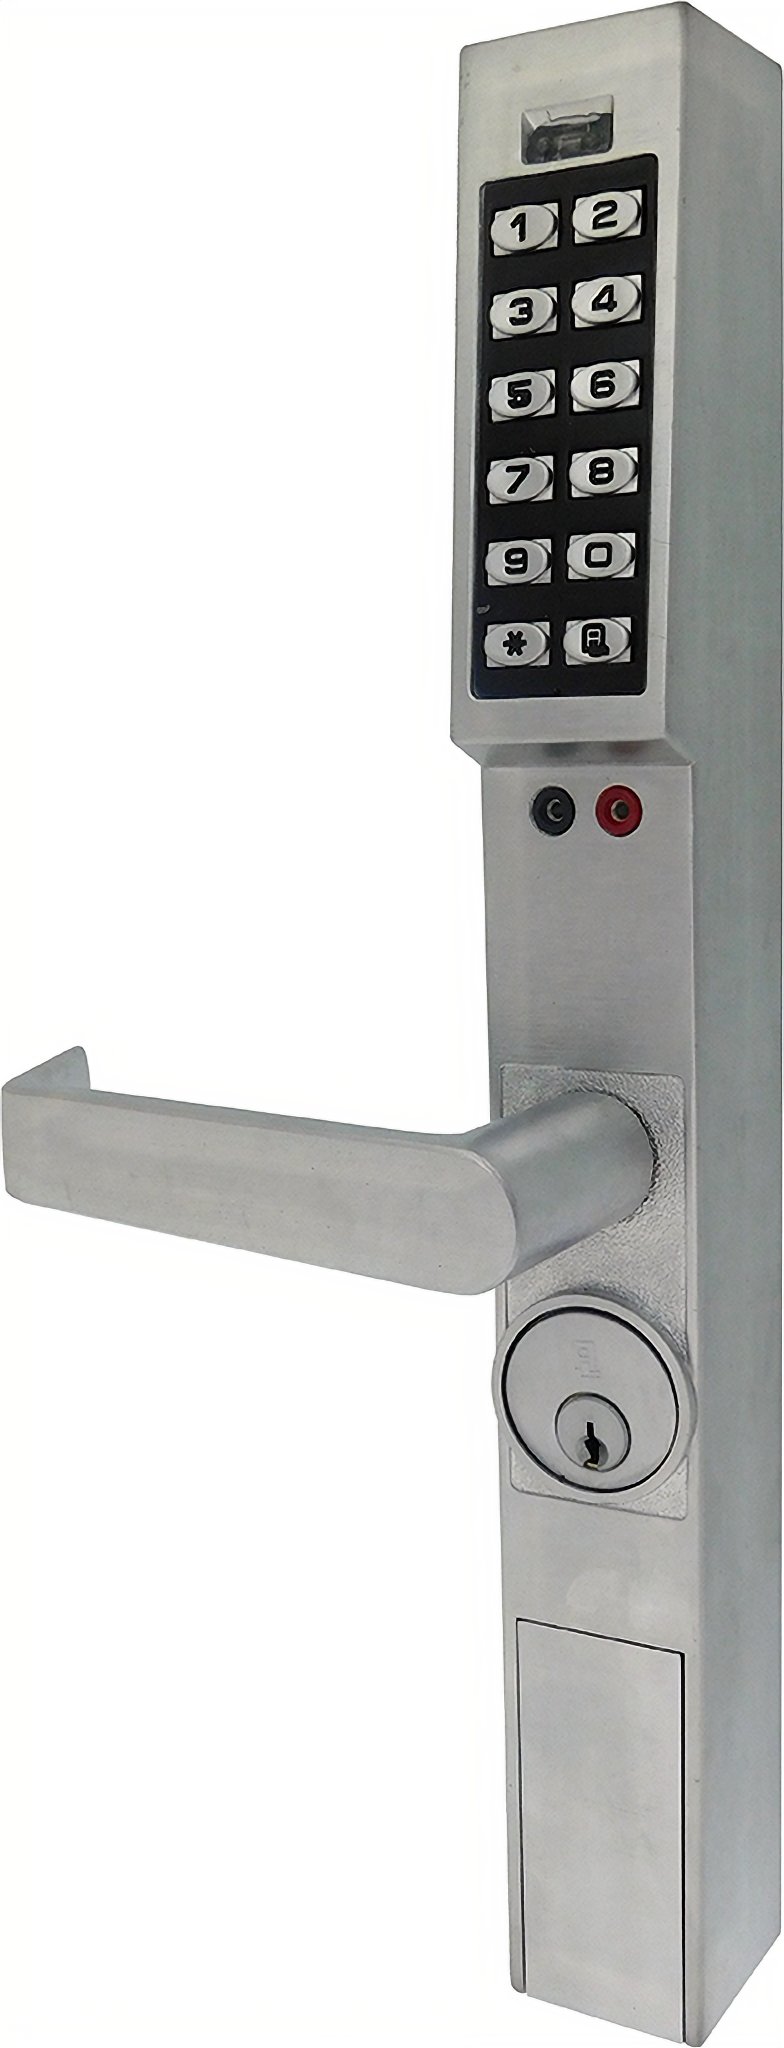 Alarm Lock DL1300/26D1 Access Control | securitylocking.com